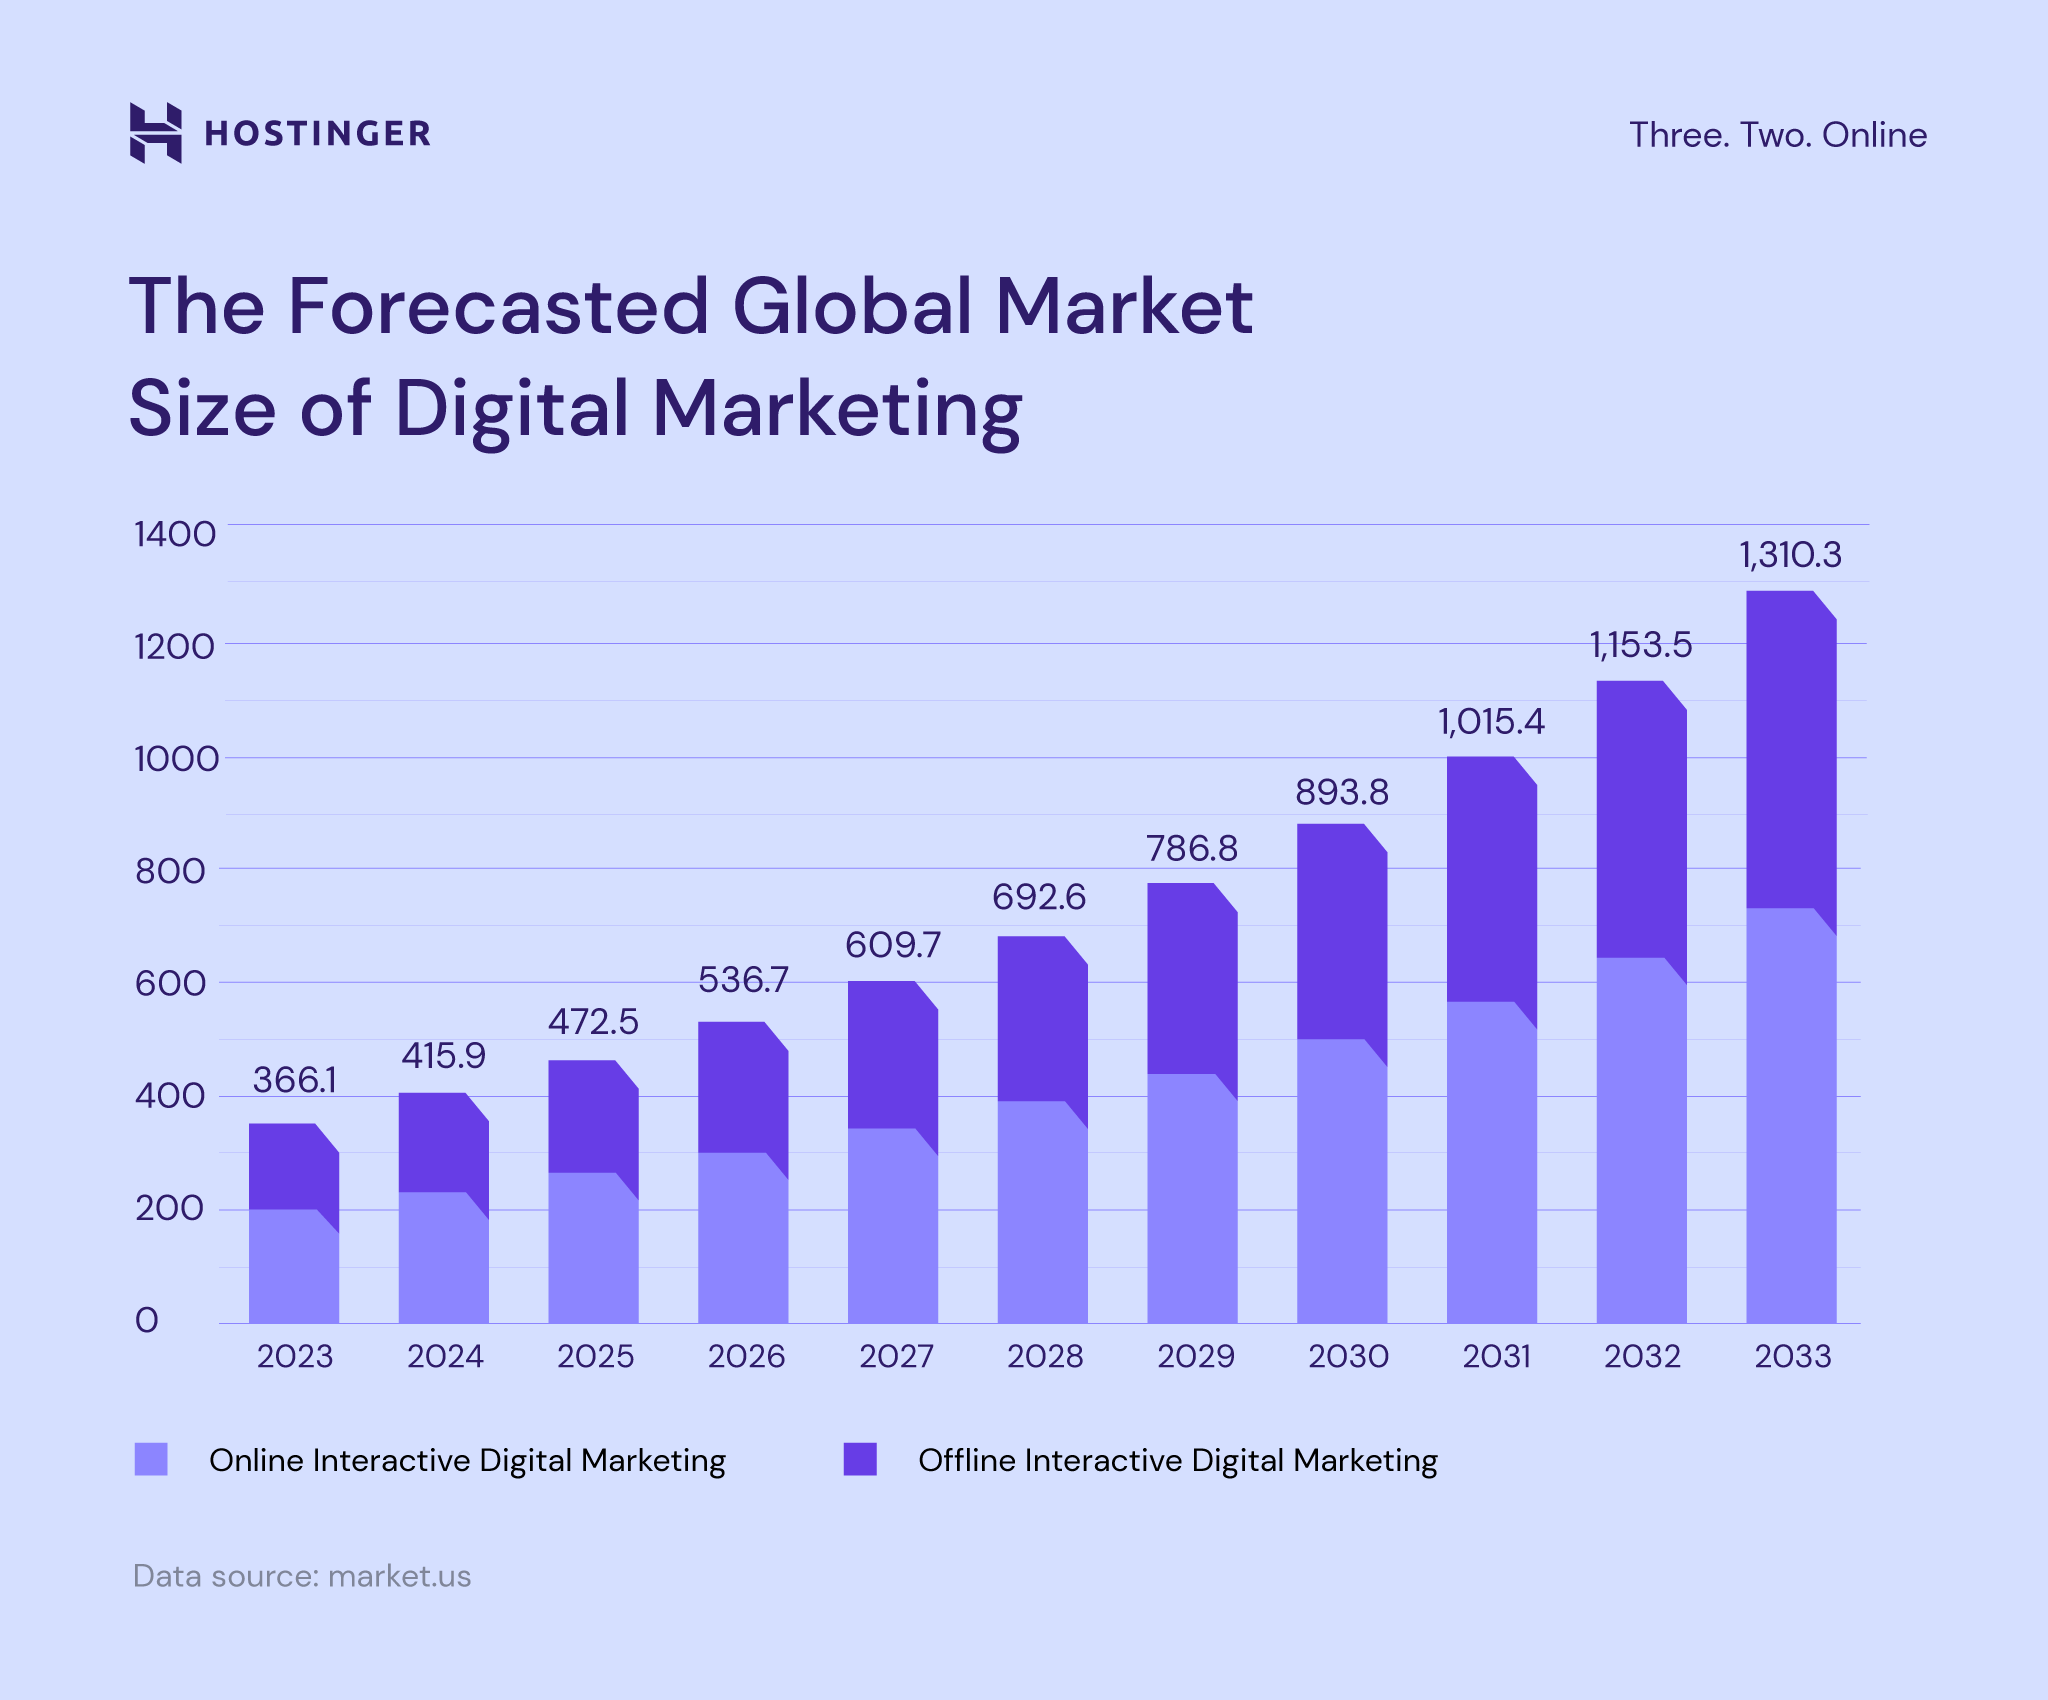 The forecasted global market size of digital marketing
